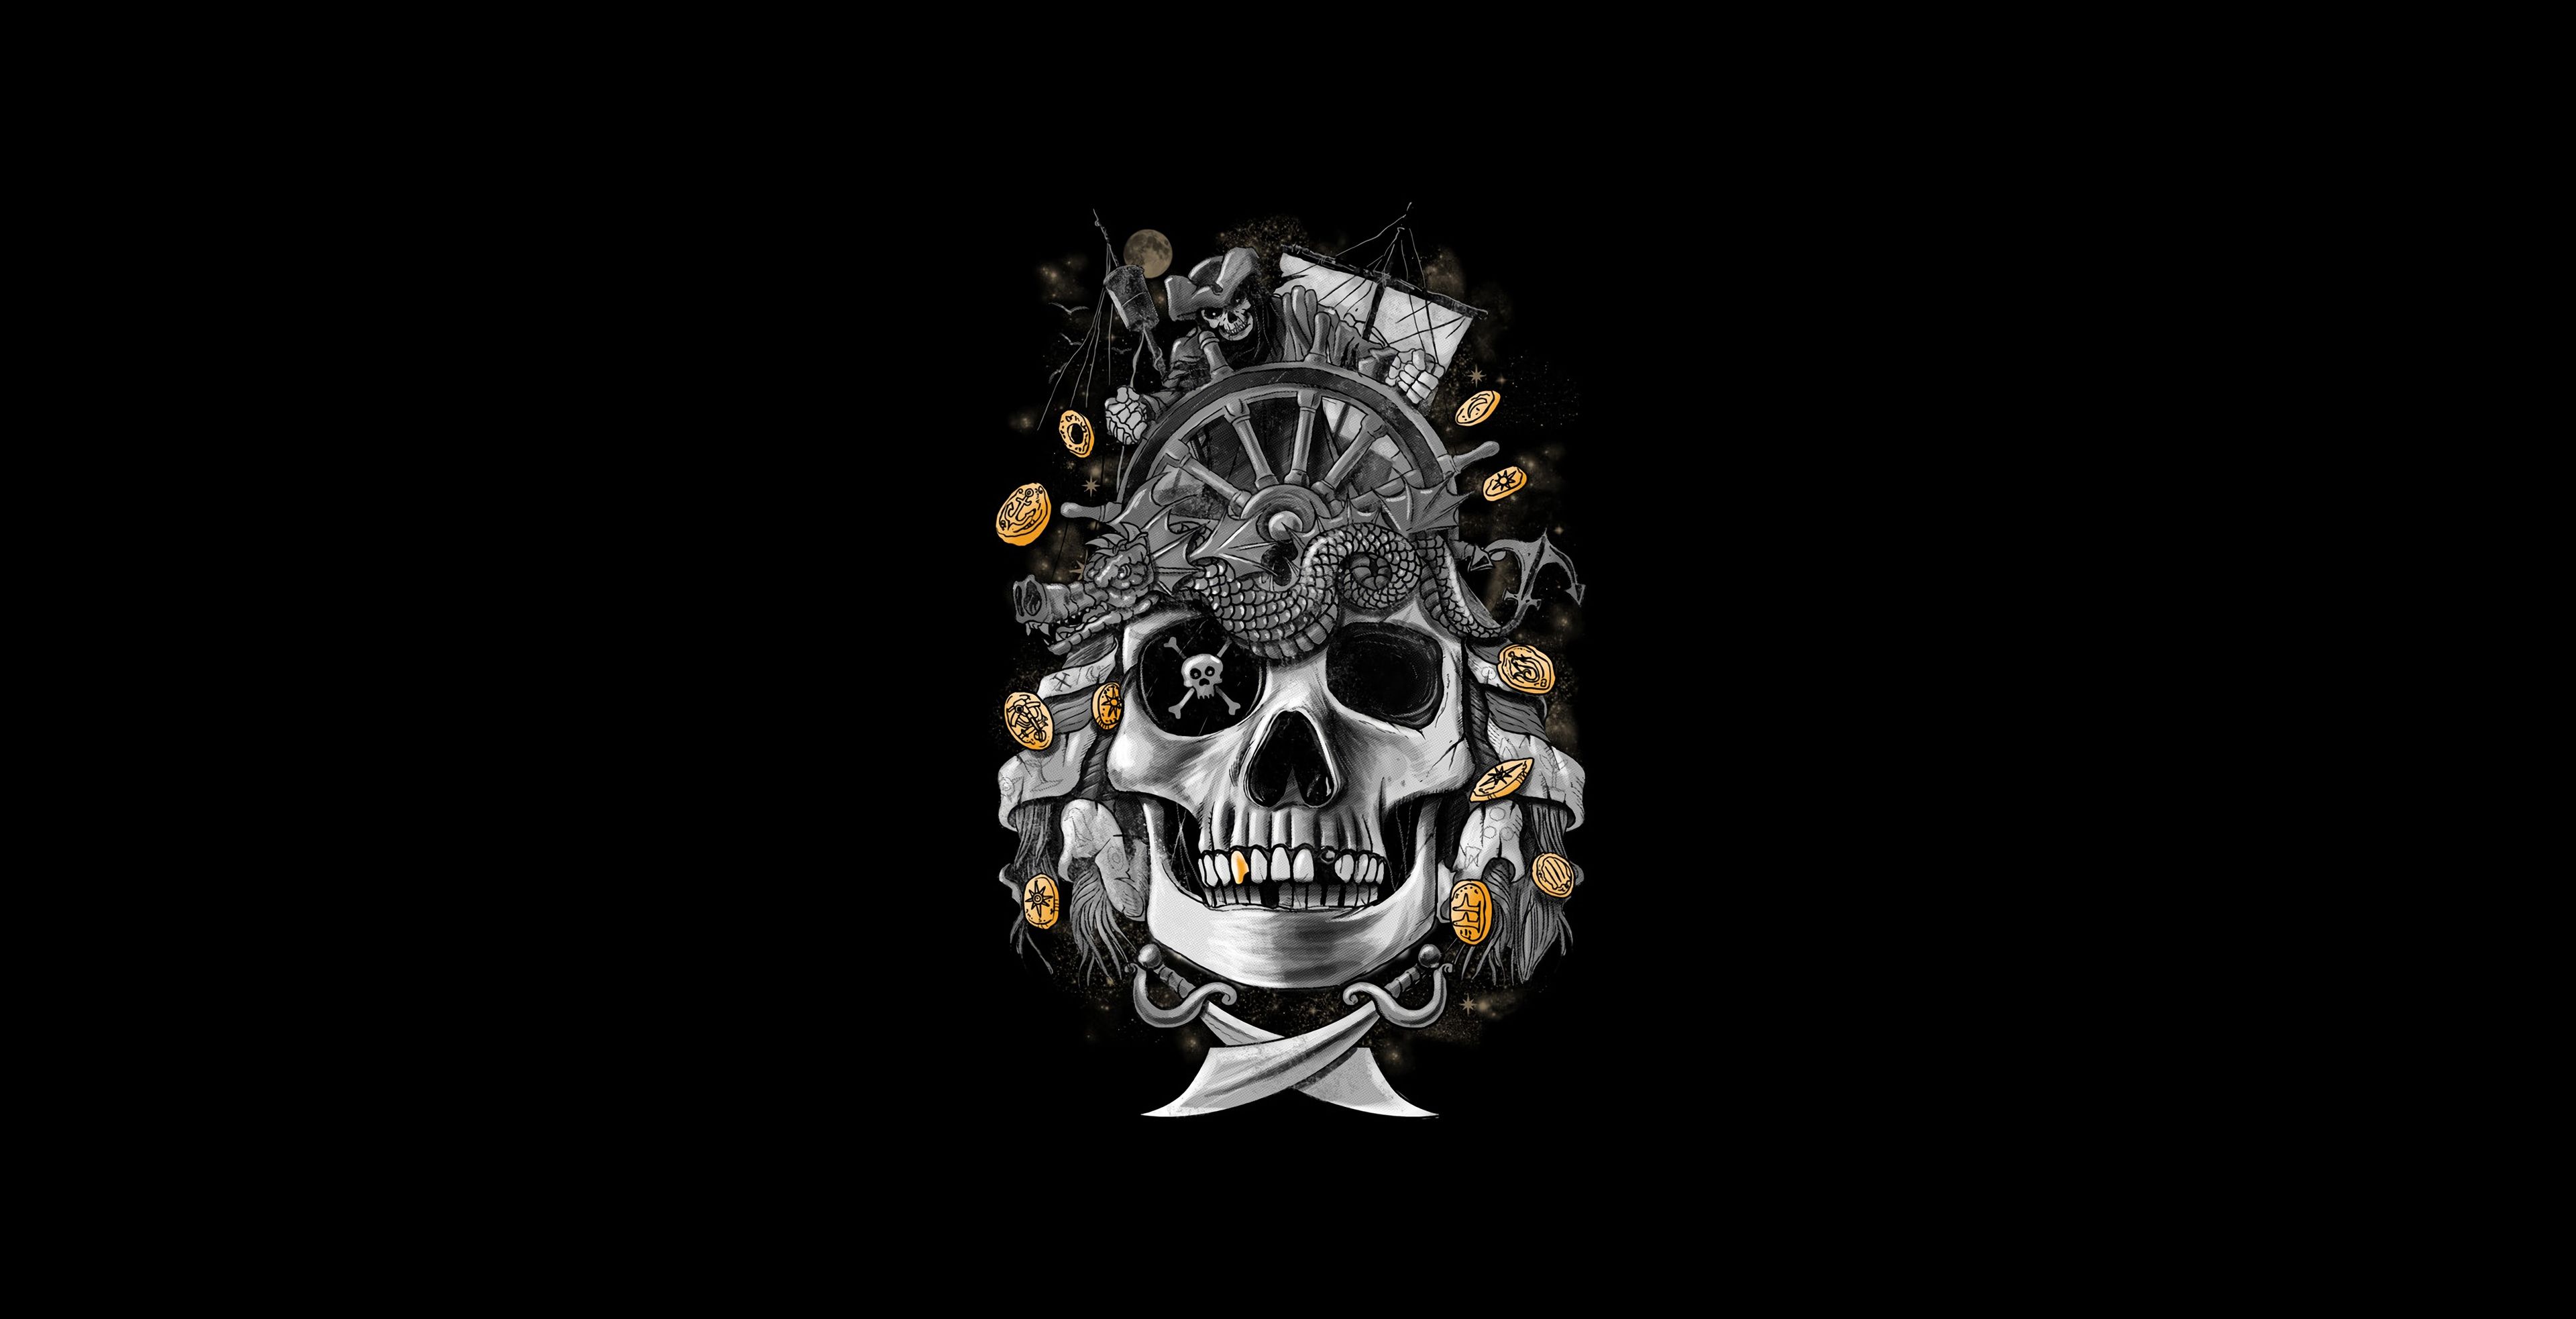 Dark Gold Skull 4k, HD Artist, 4k Wallpaper, Image, Background, Photo and Picture